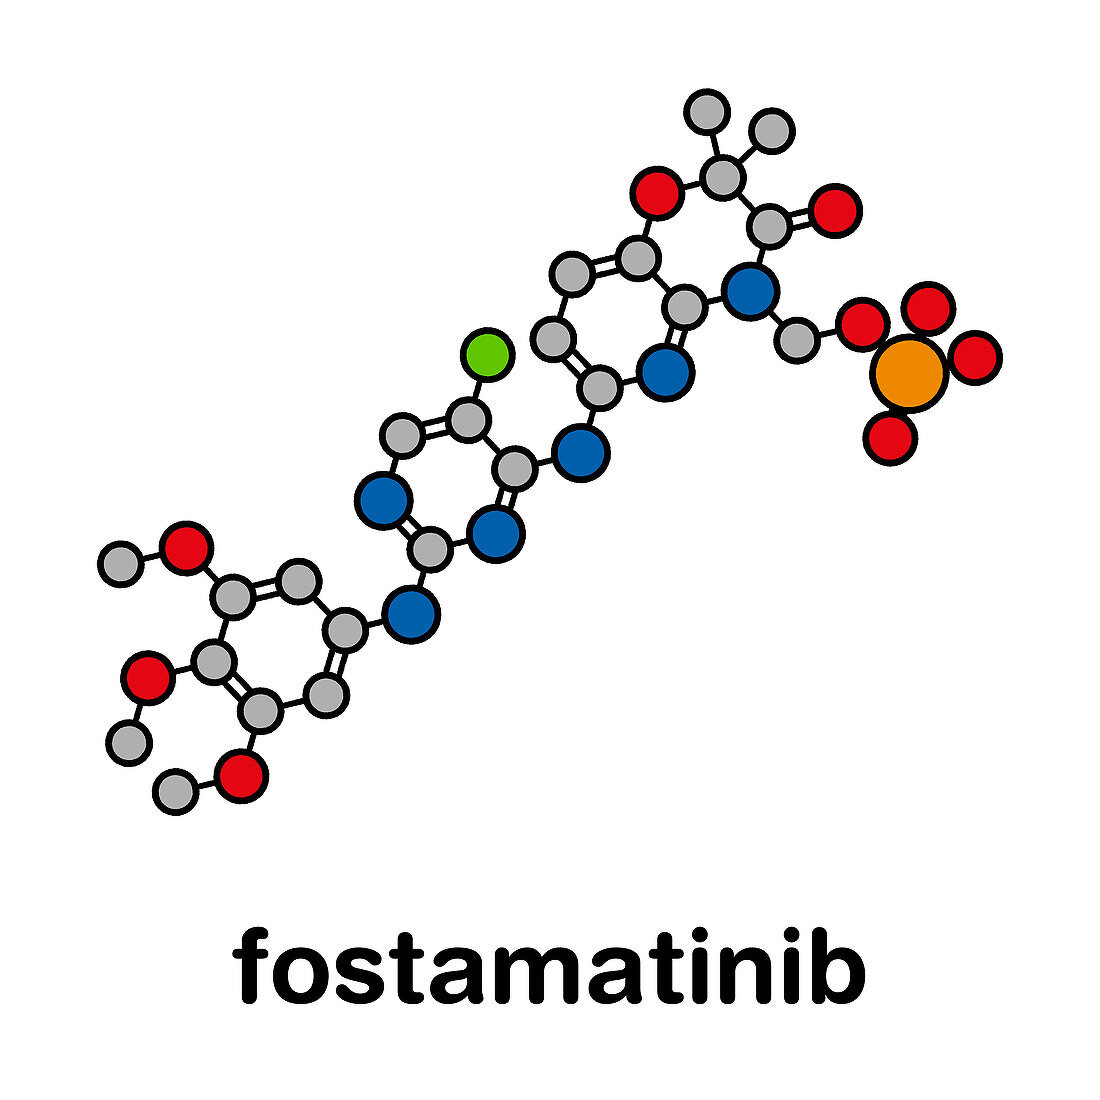 Fostamatinib rheumatoid arthritis drug, illustration